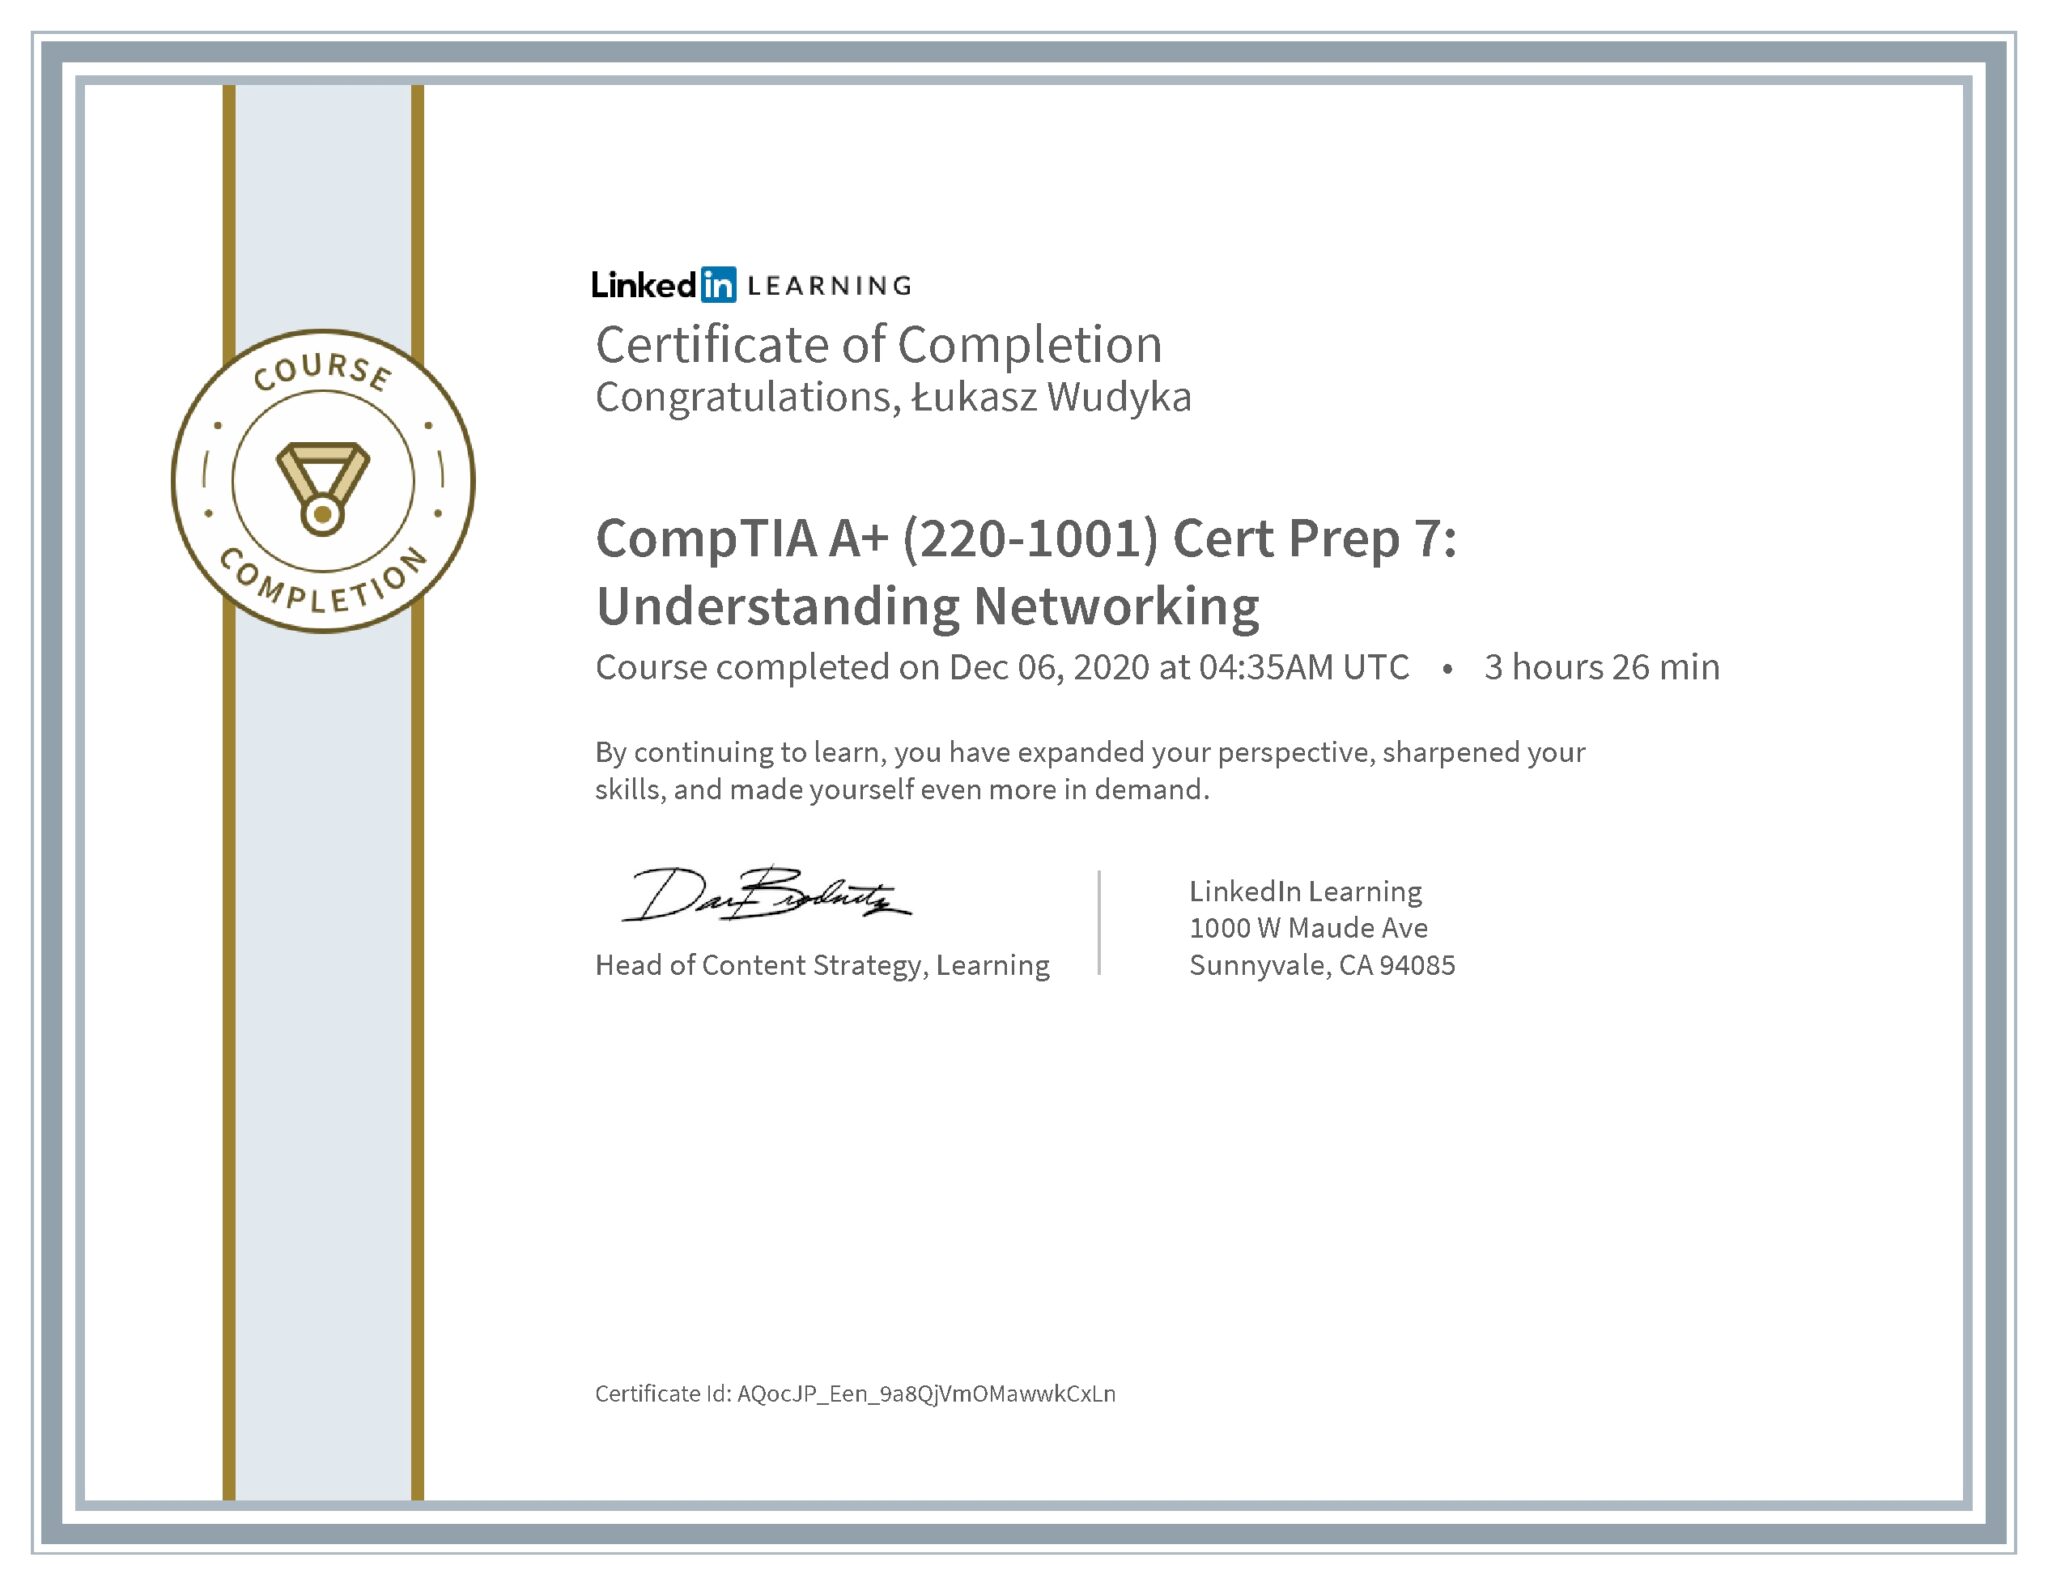 Łukasz Wudyka certyfikat LinkedIn CompTIA A+ (220-1001) Cert Prep 7: Understanding Networking